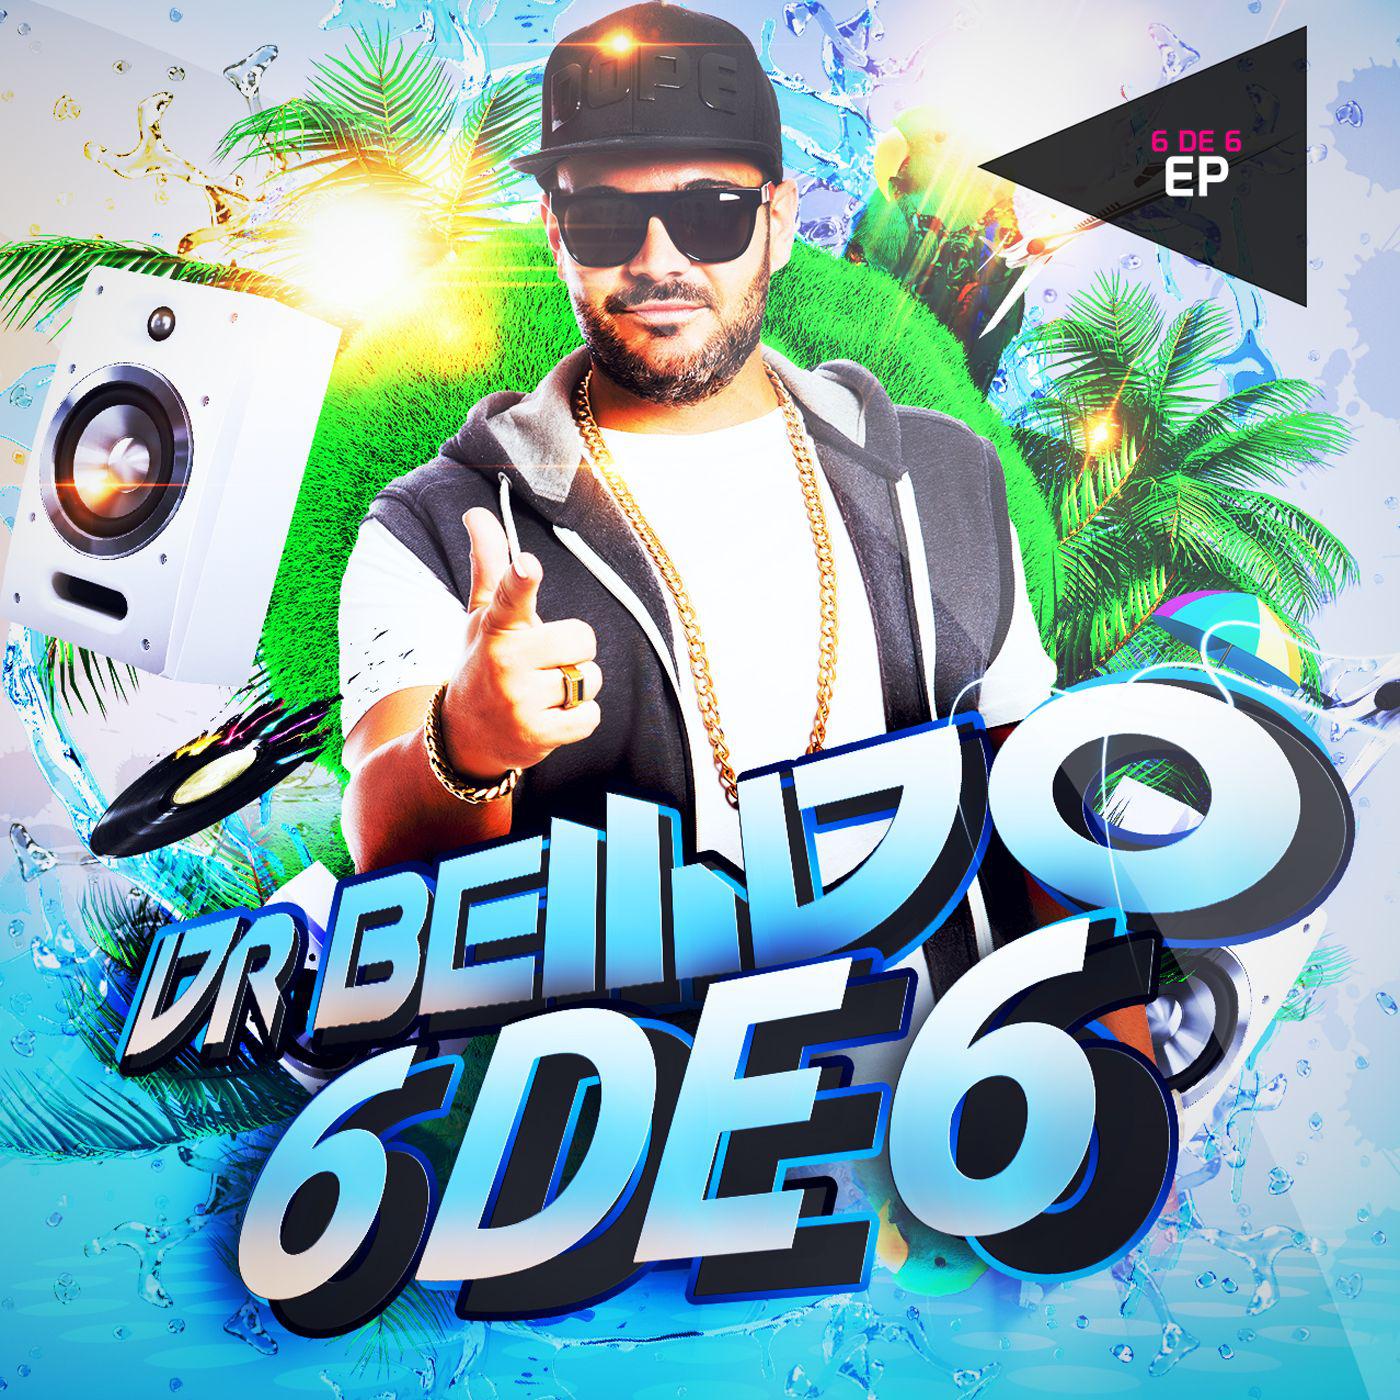 Dr. Bellido - Acércate (Radio edit)